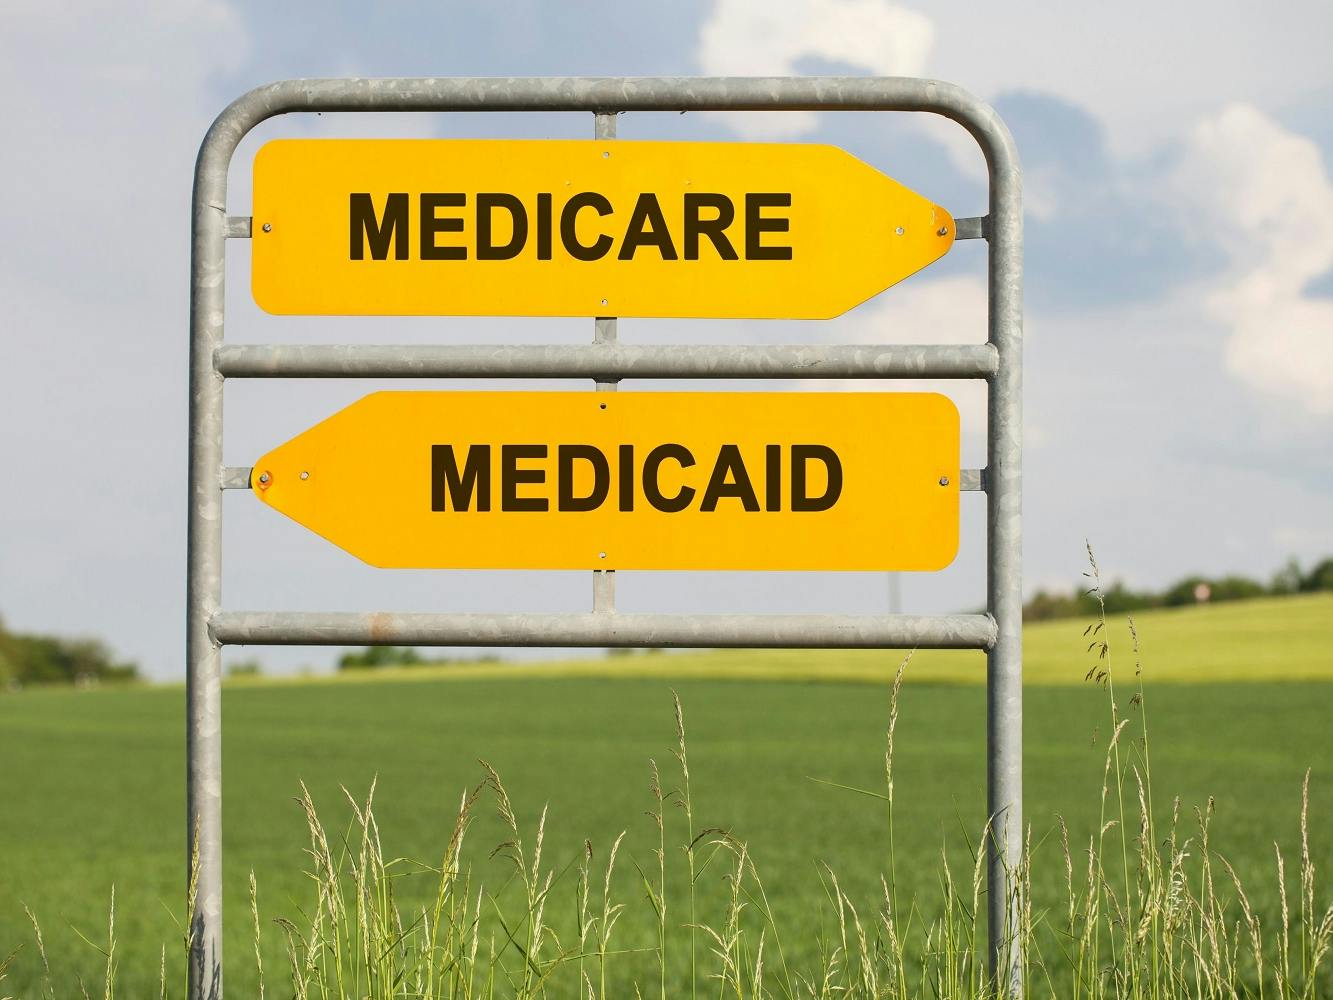 If I Have Medicaid Do I Need Medicare